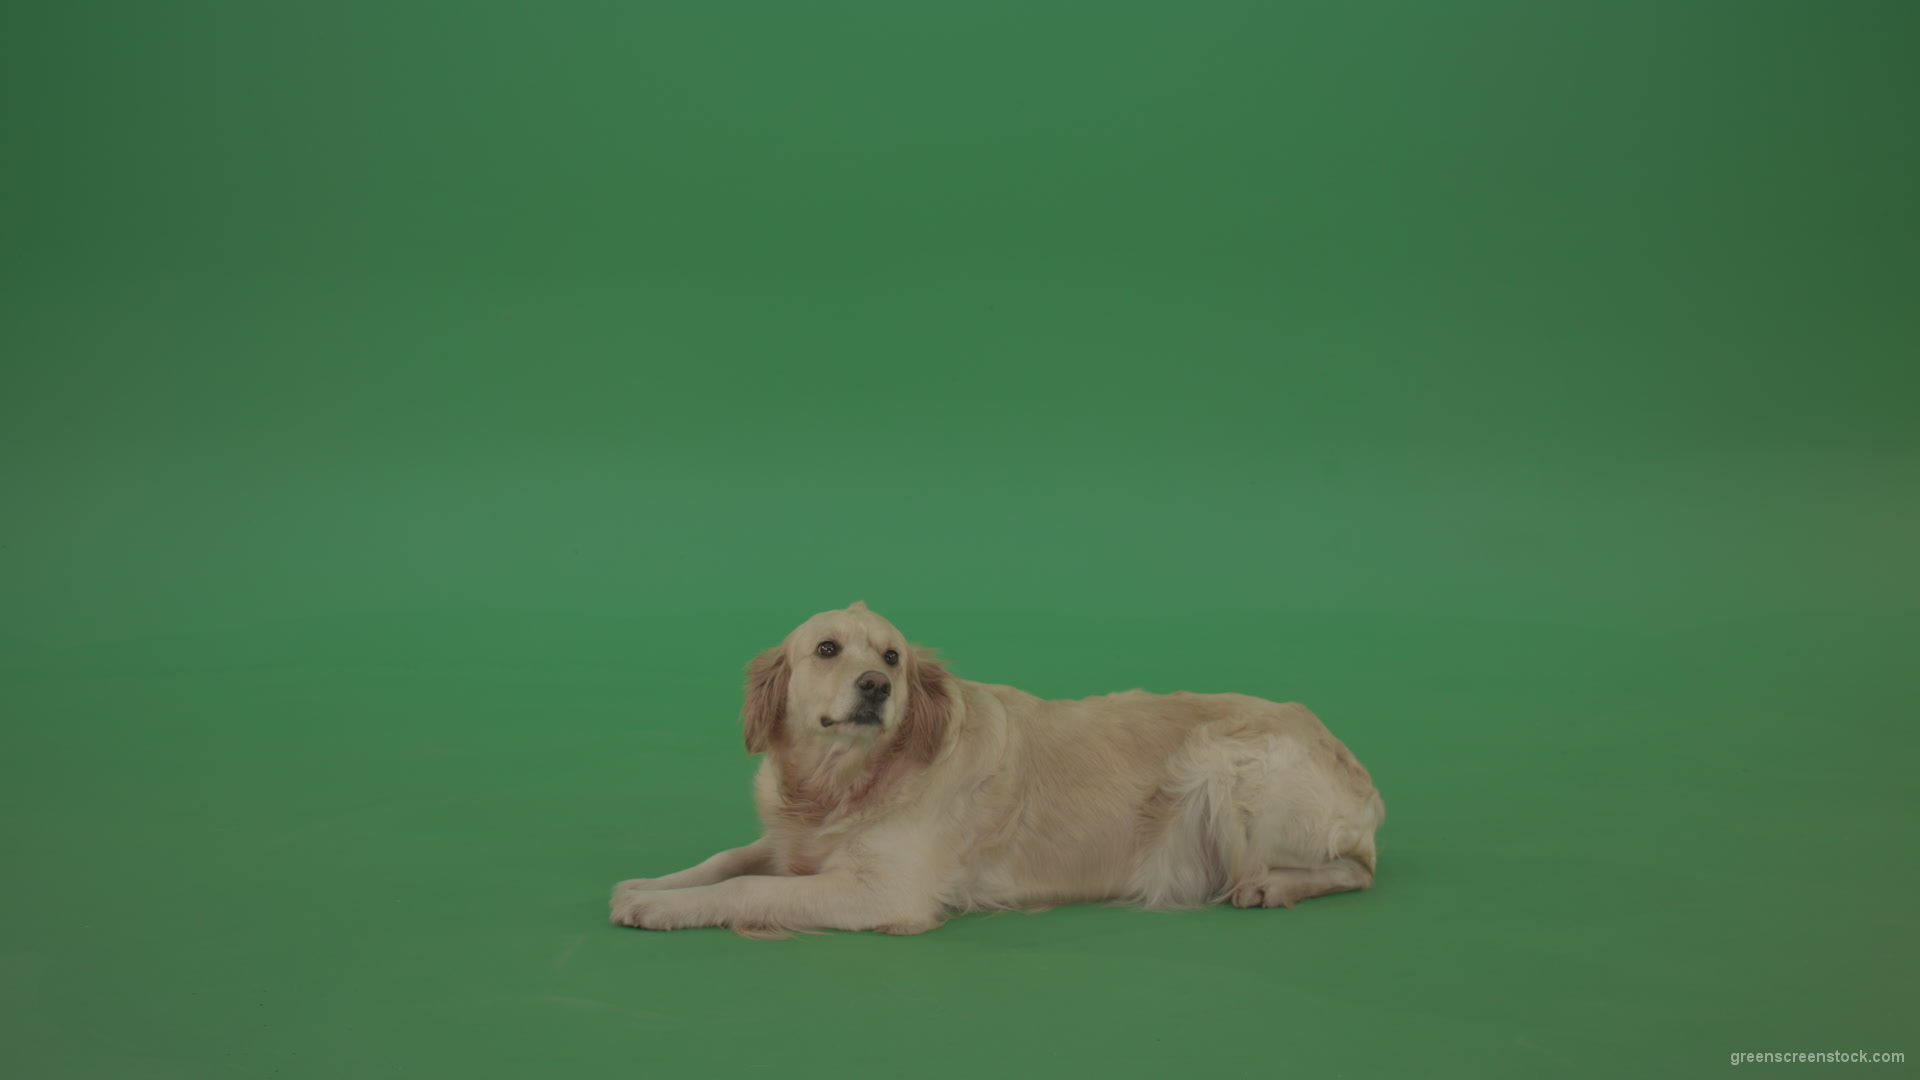 Golden-Retriever-Gun-Dog-Bird-Dog-lying-green-floor-isolated-on-green-screen_007 Green Screen Stock